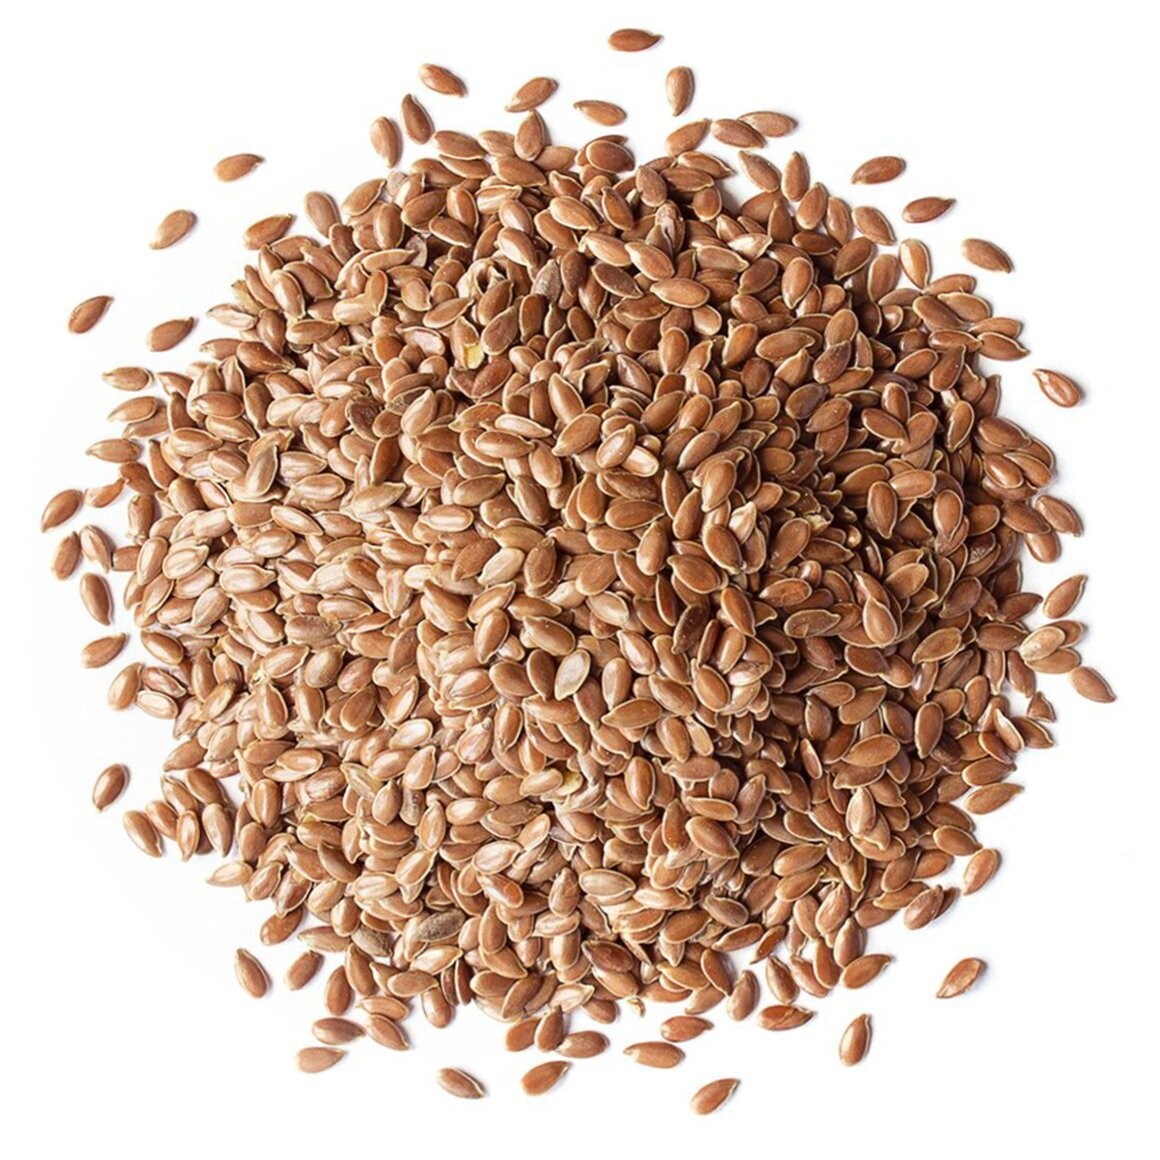 402 Flax Seeds Brown Organic - 1 lb. (I2)